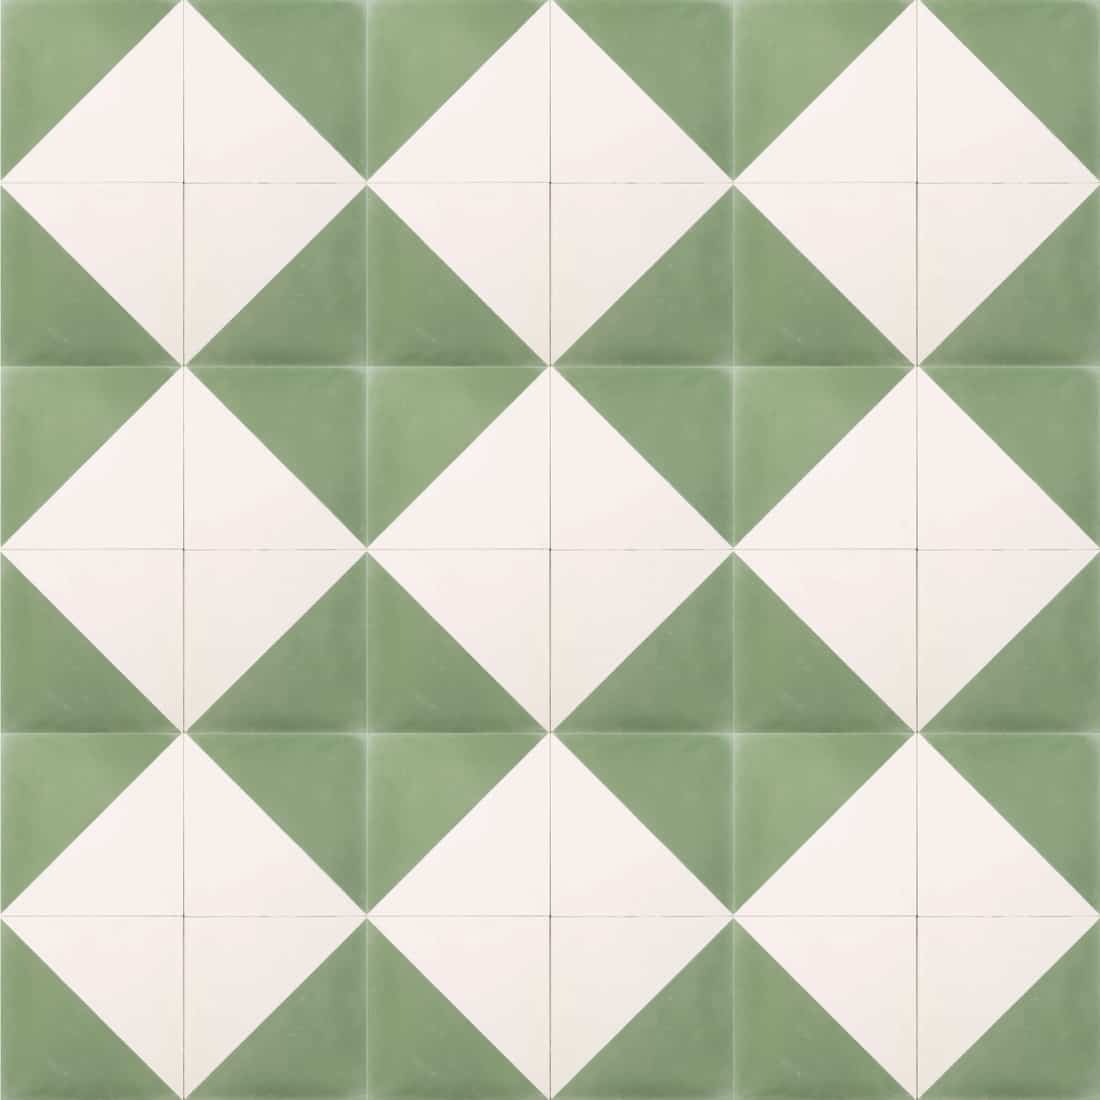 Seamless rhombus diamond shaped floor and wall tile texture in jade green. Jade Checkered Square Tiles backsplash